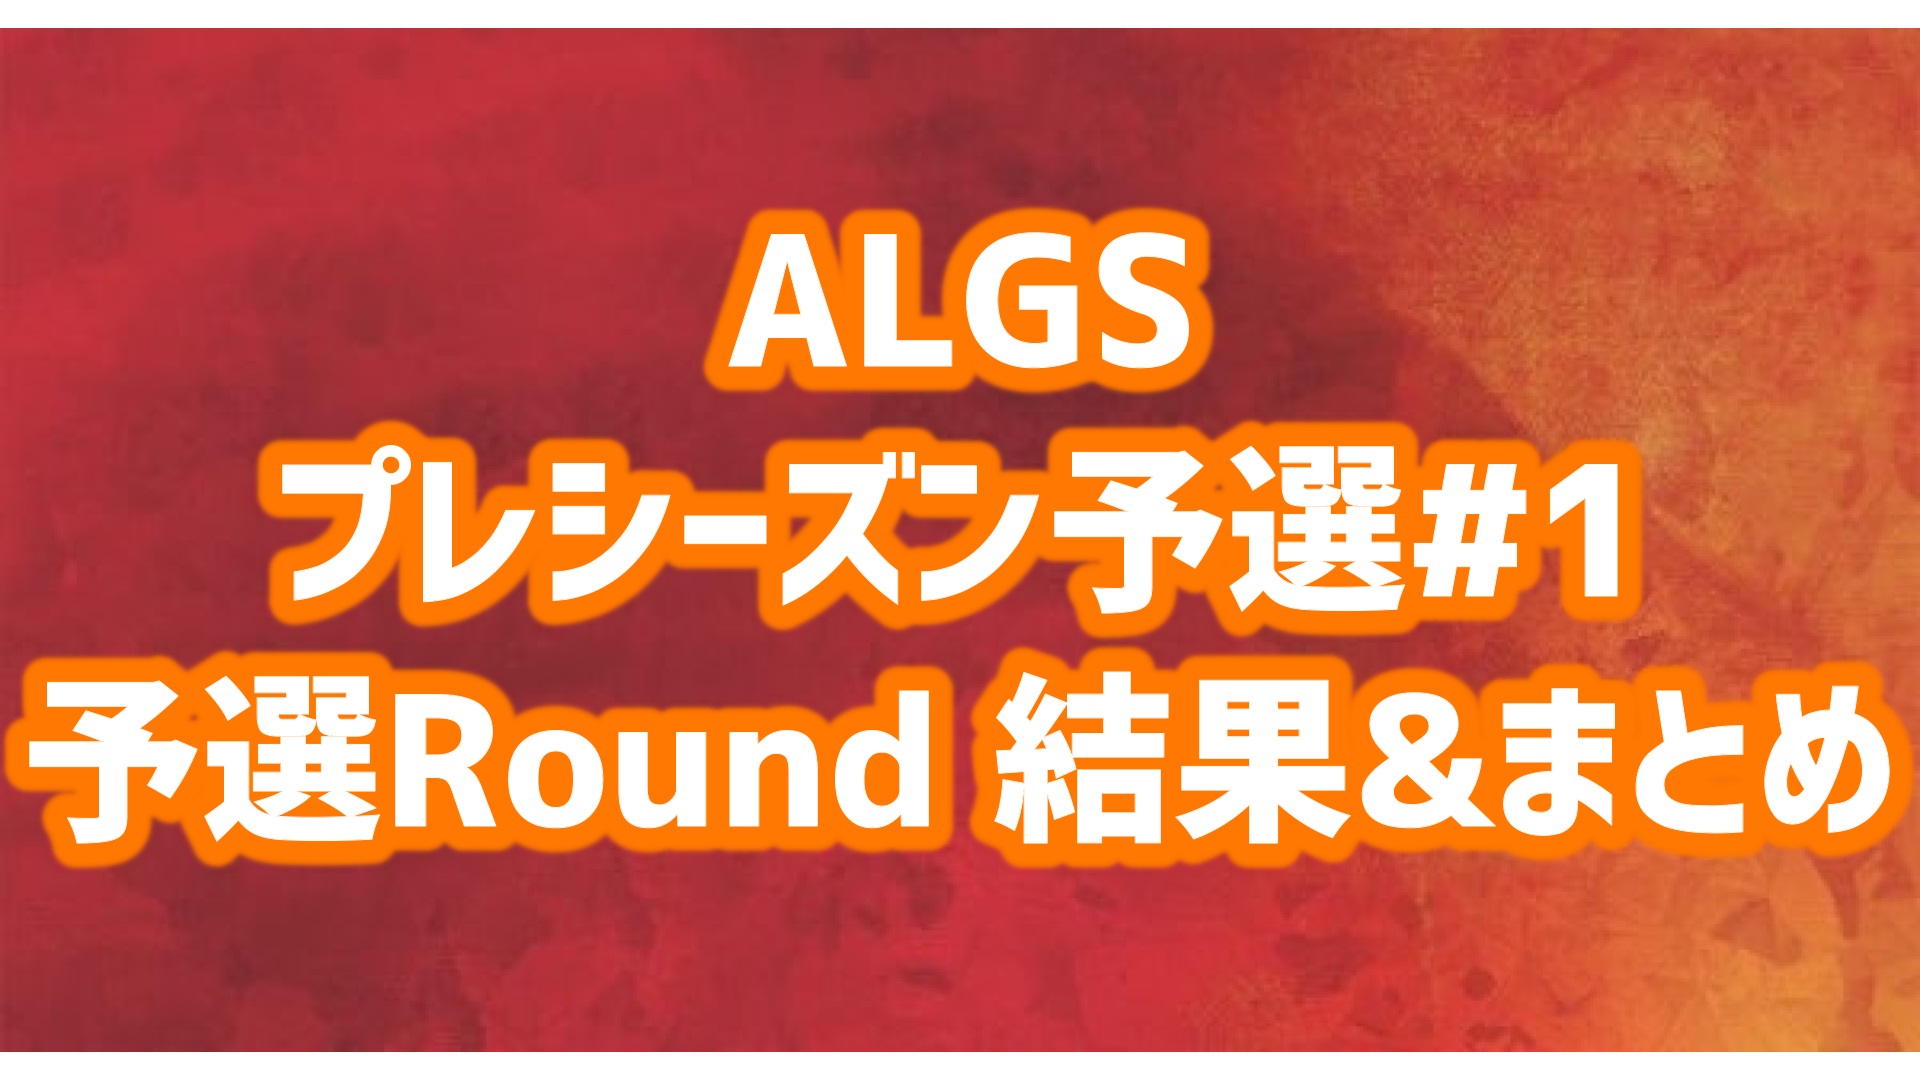 ALGSプレシーズン予選 予選Round